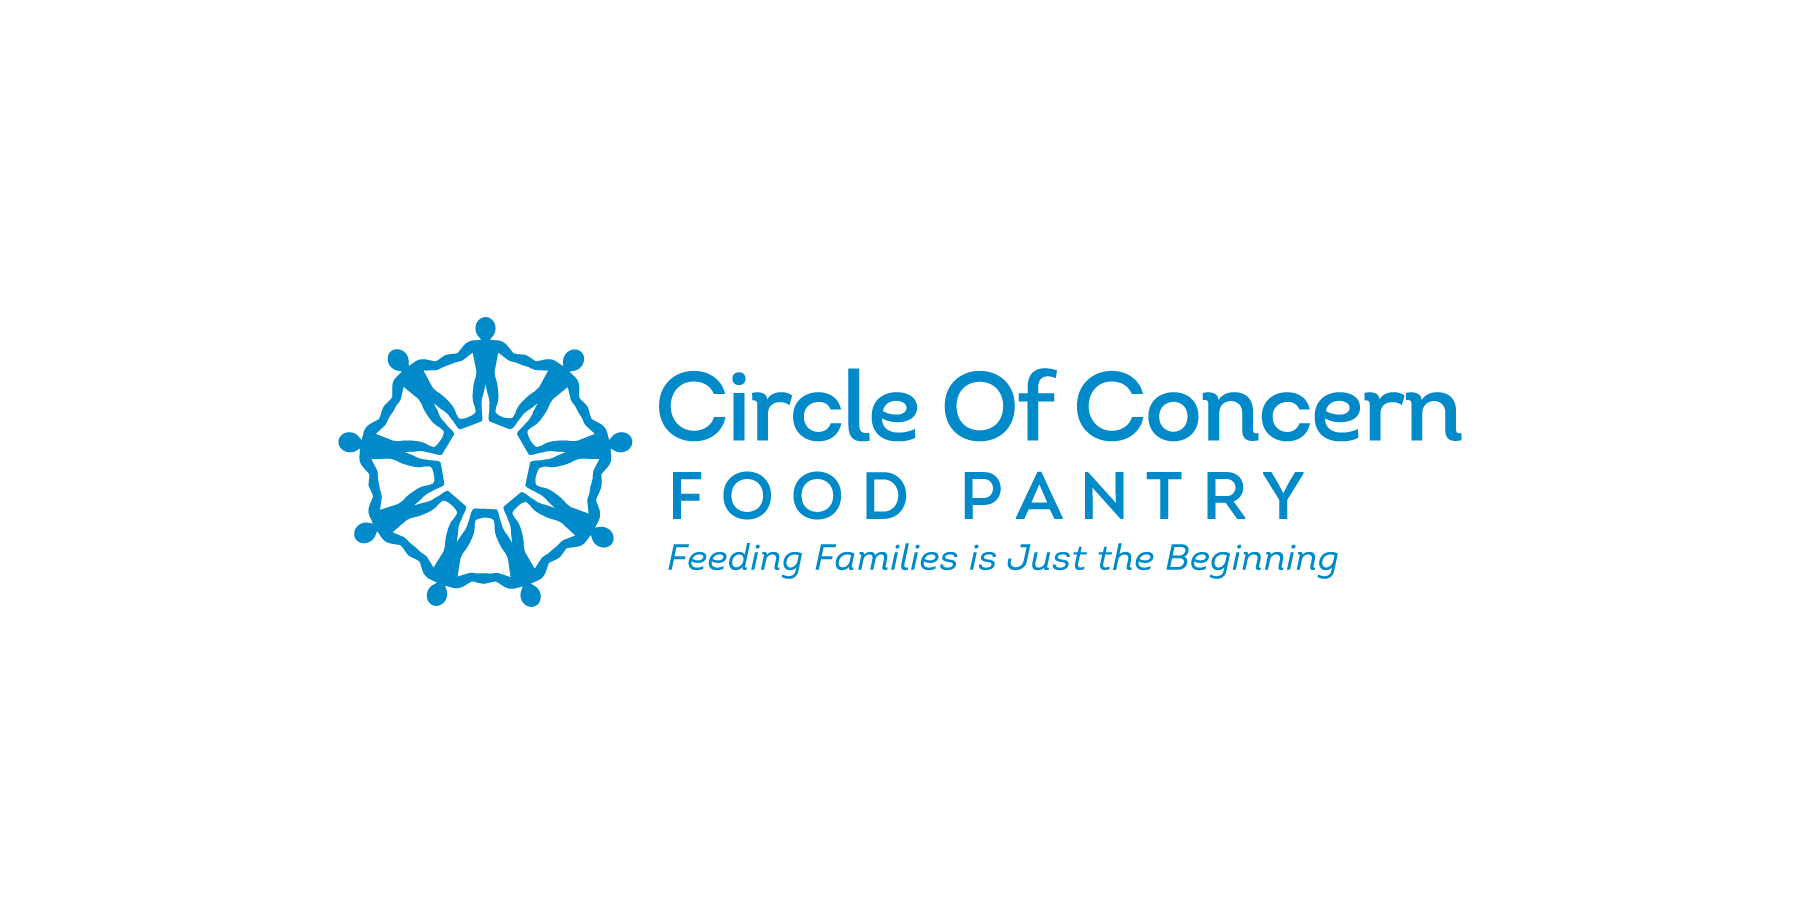 Concern Logo - Circle Of Concern Food Pantry Branding by Visual Lure of St. Louis